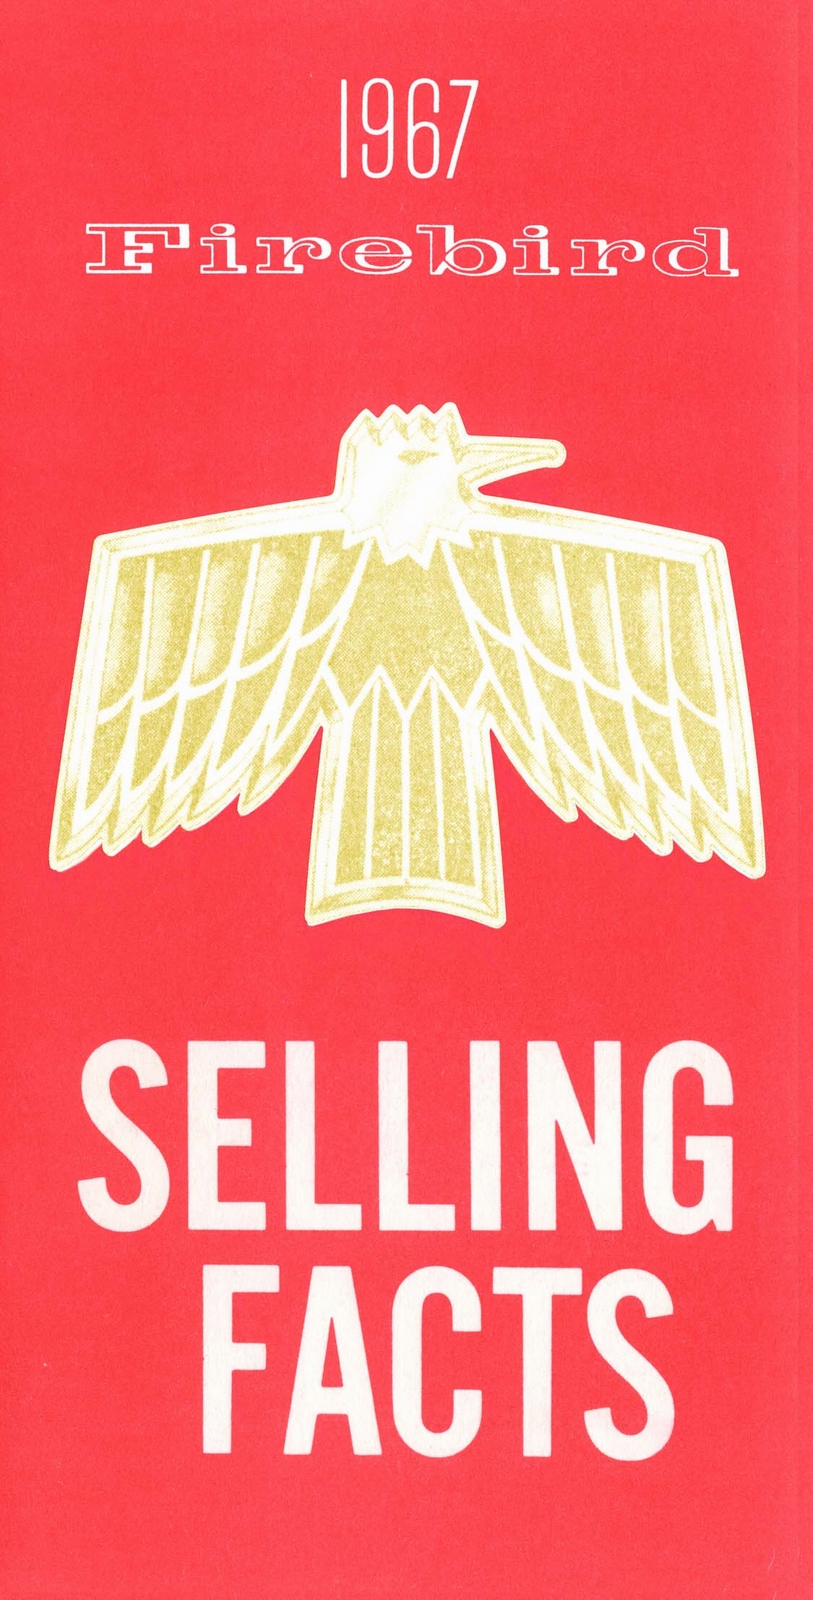 n_1967 Pontiac Firebird Selling Facts-00.jpg